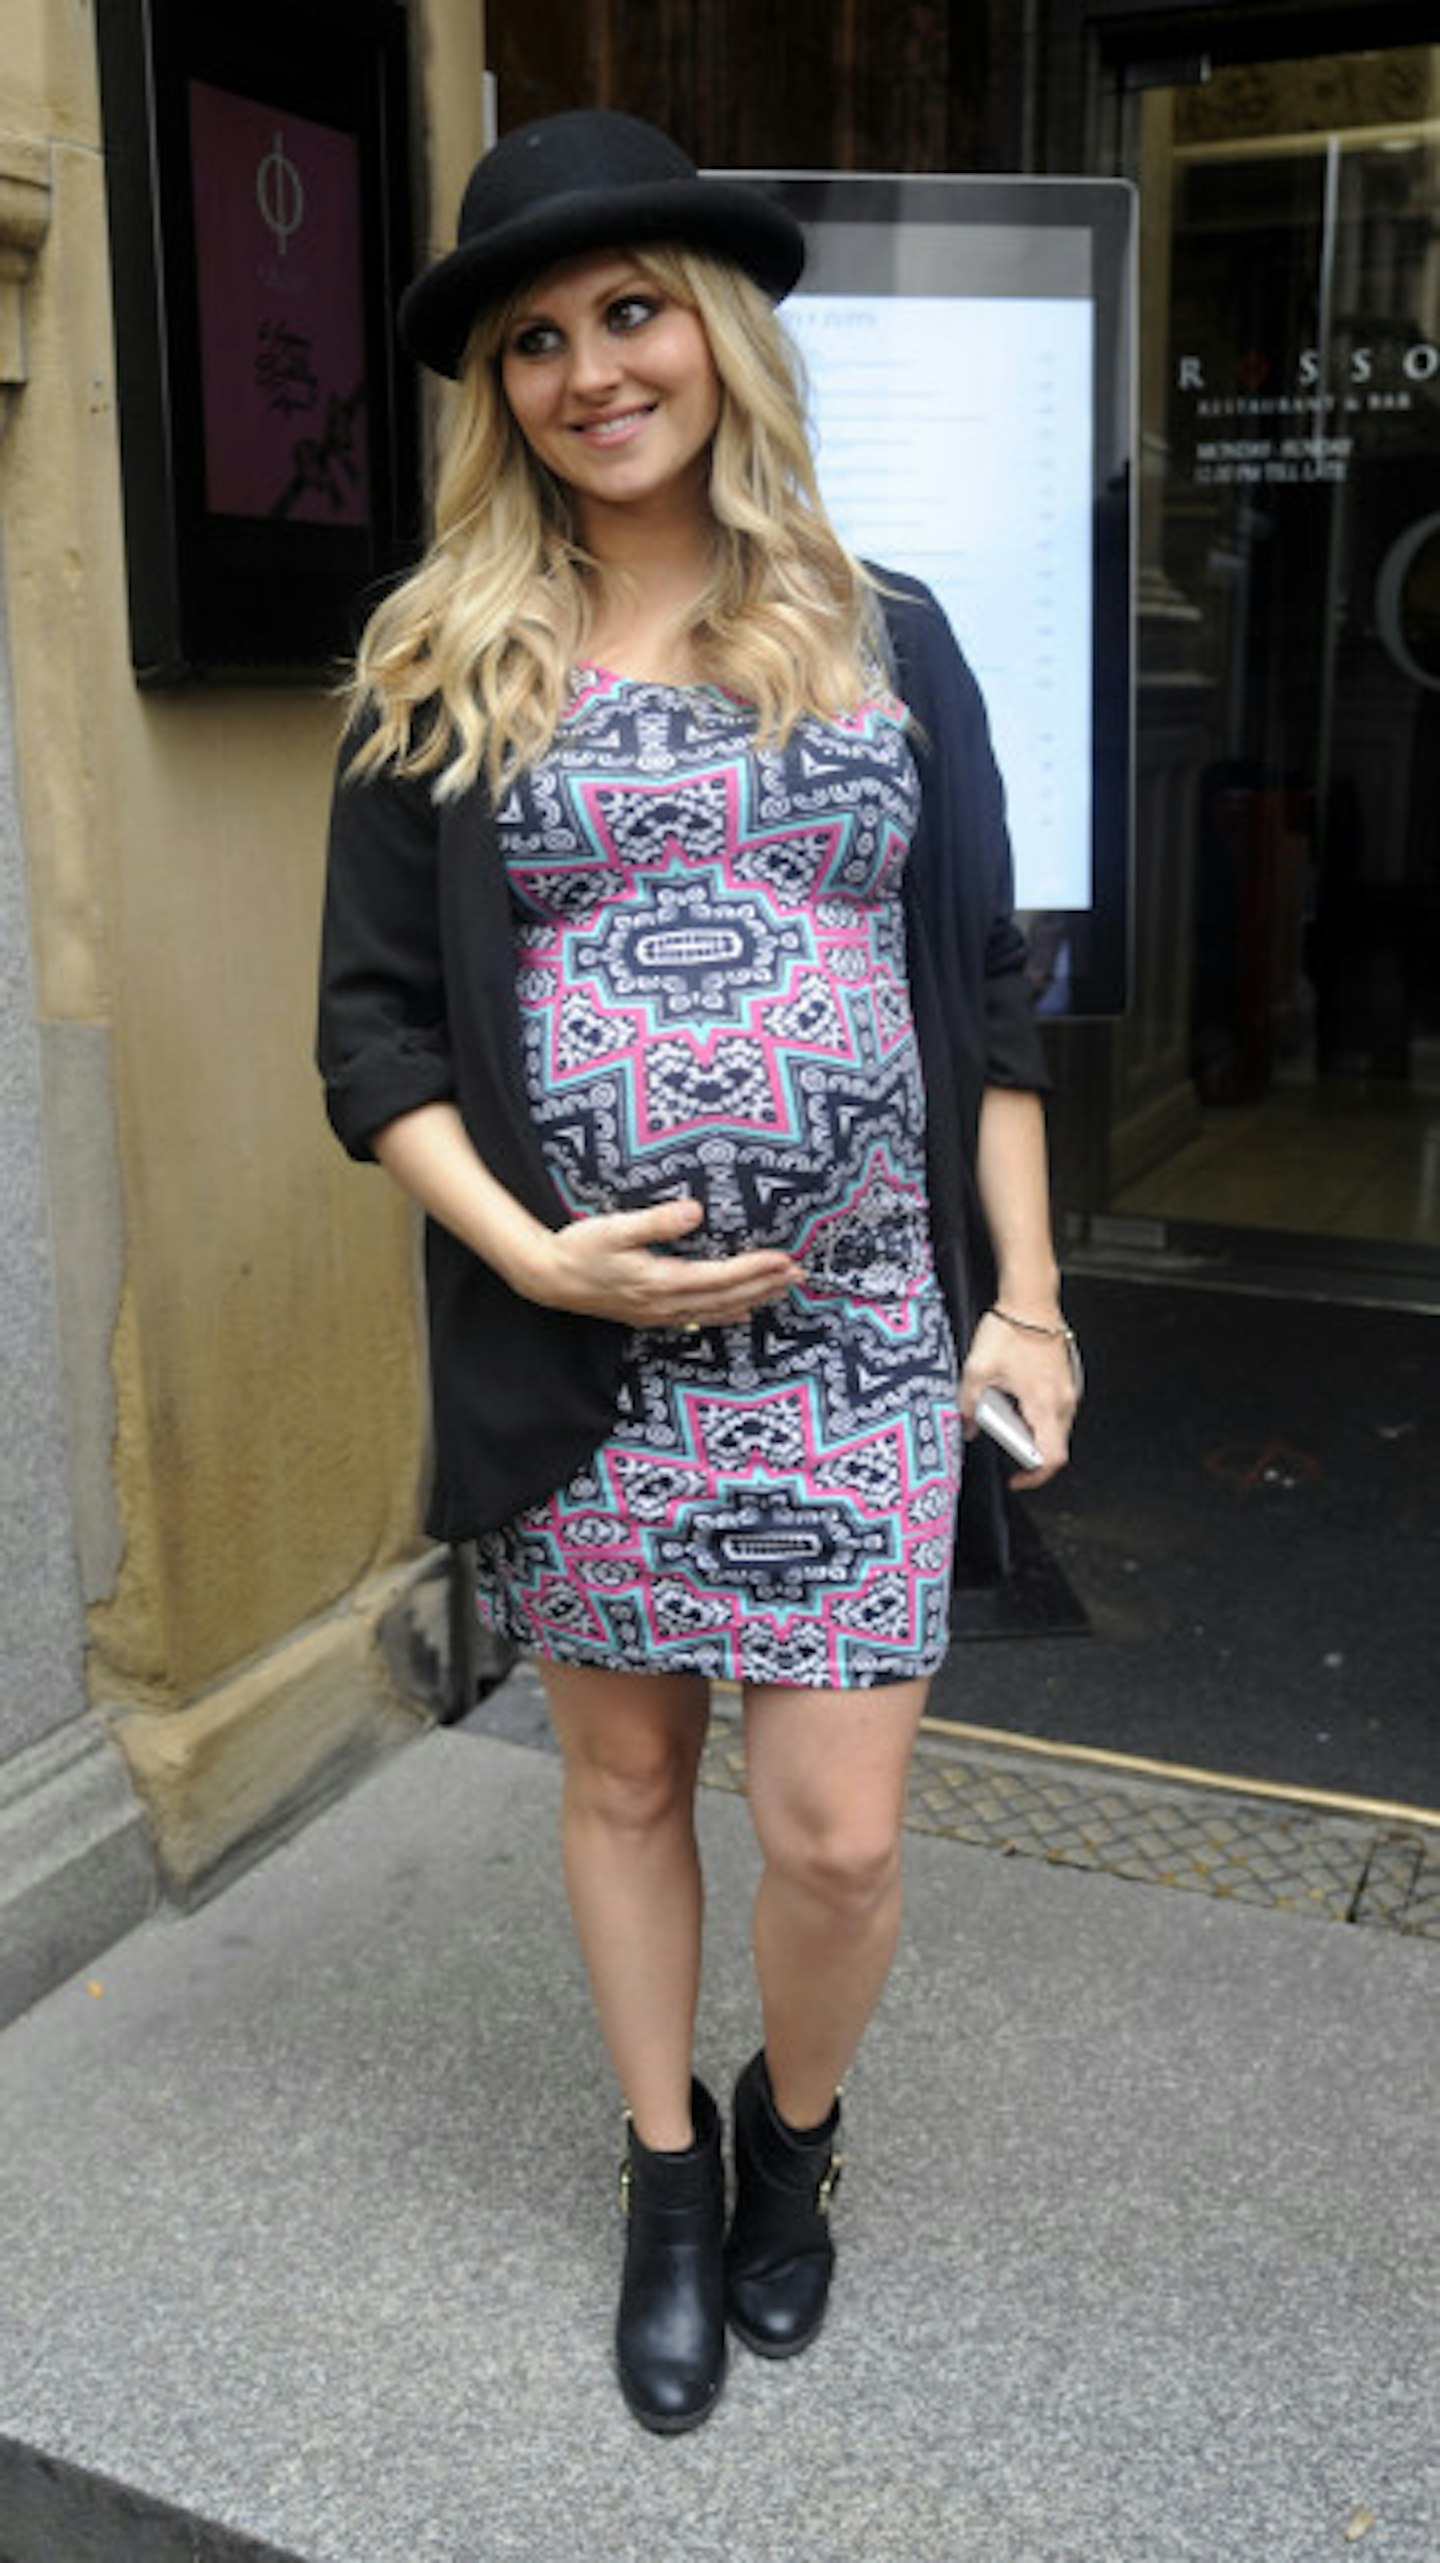 Tina O'Brien during her pregnancy